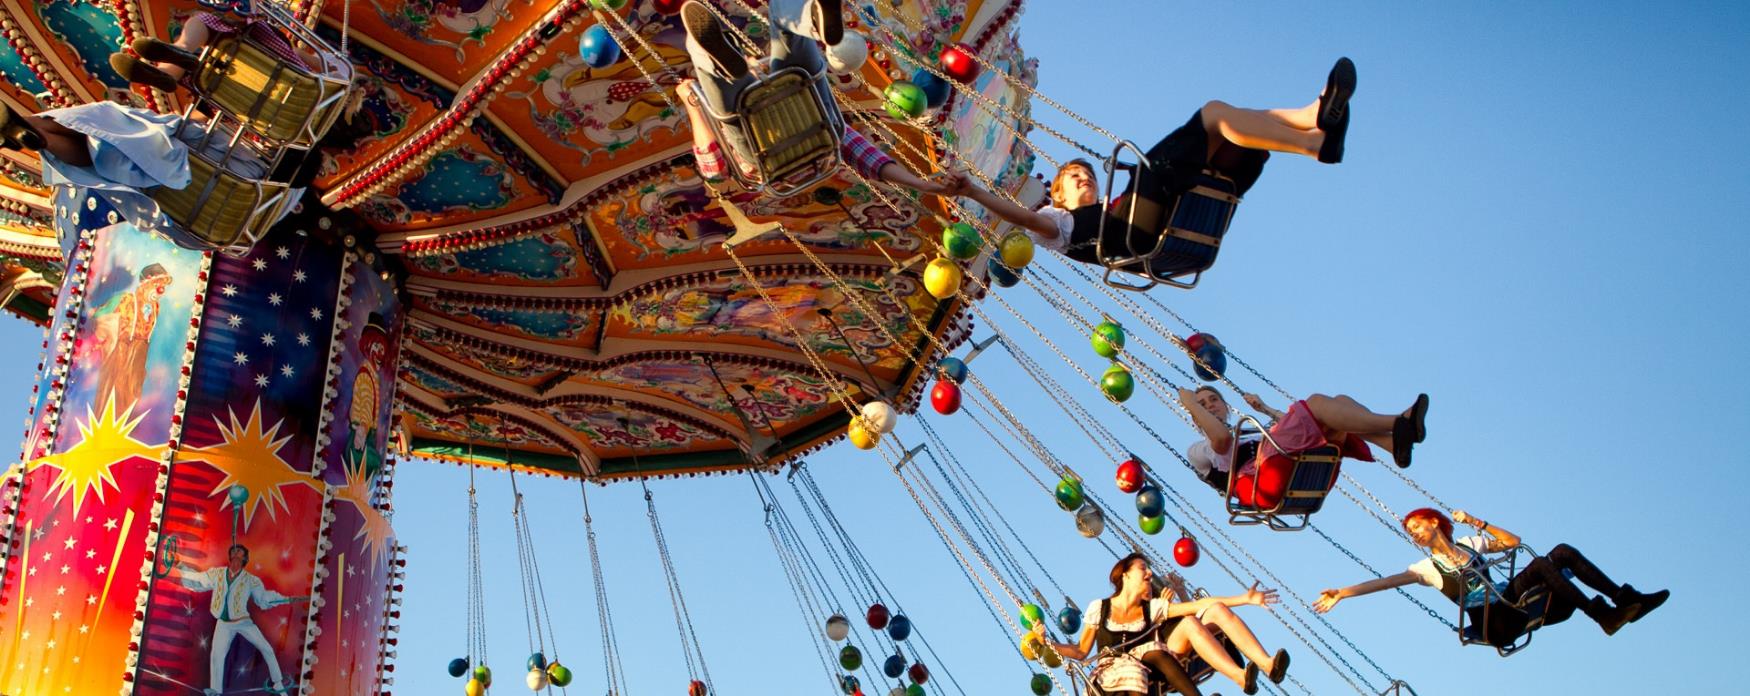 An image of people enjoyingt the fair in Richmond